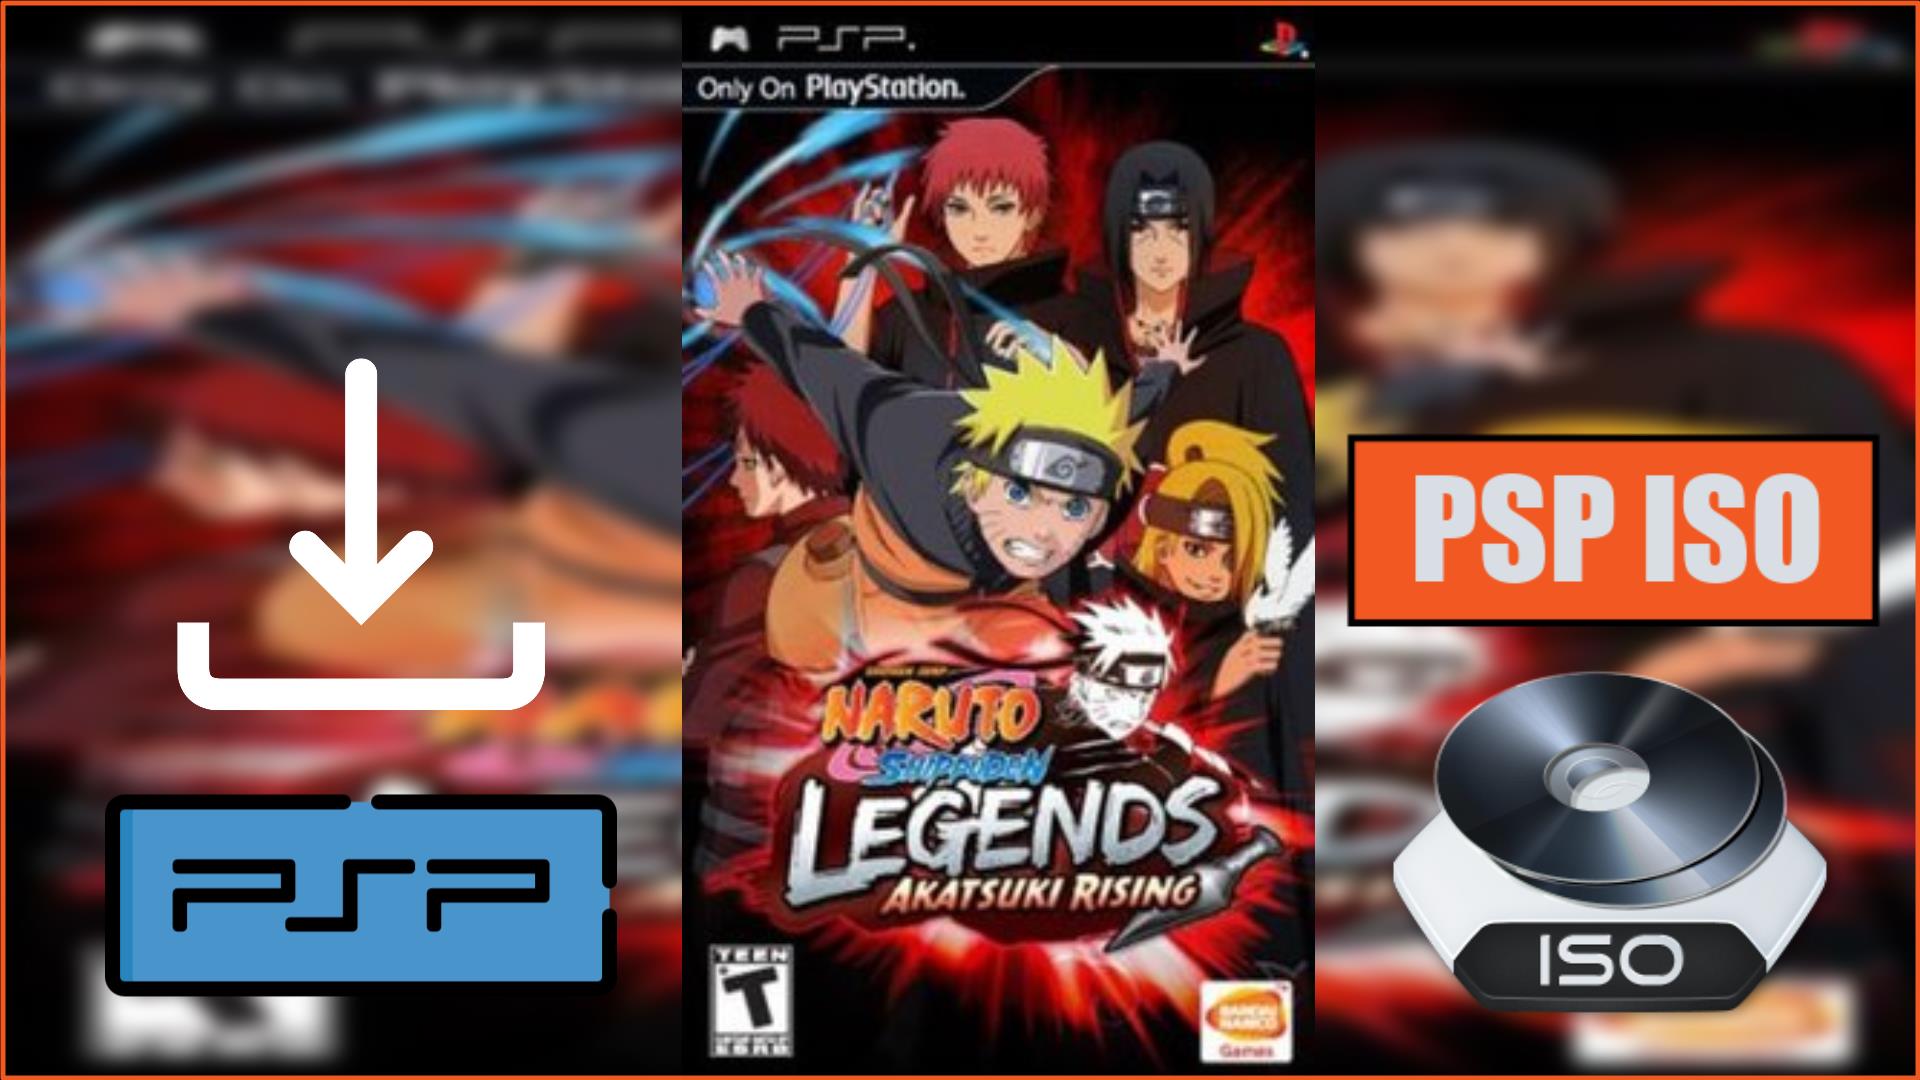 Naruto Shippuden Legends Akatsuki Rising PSP ISO Download